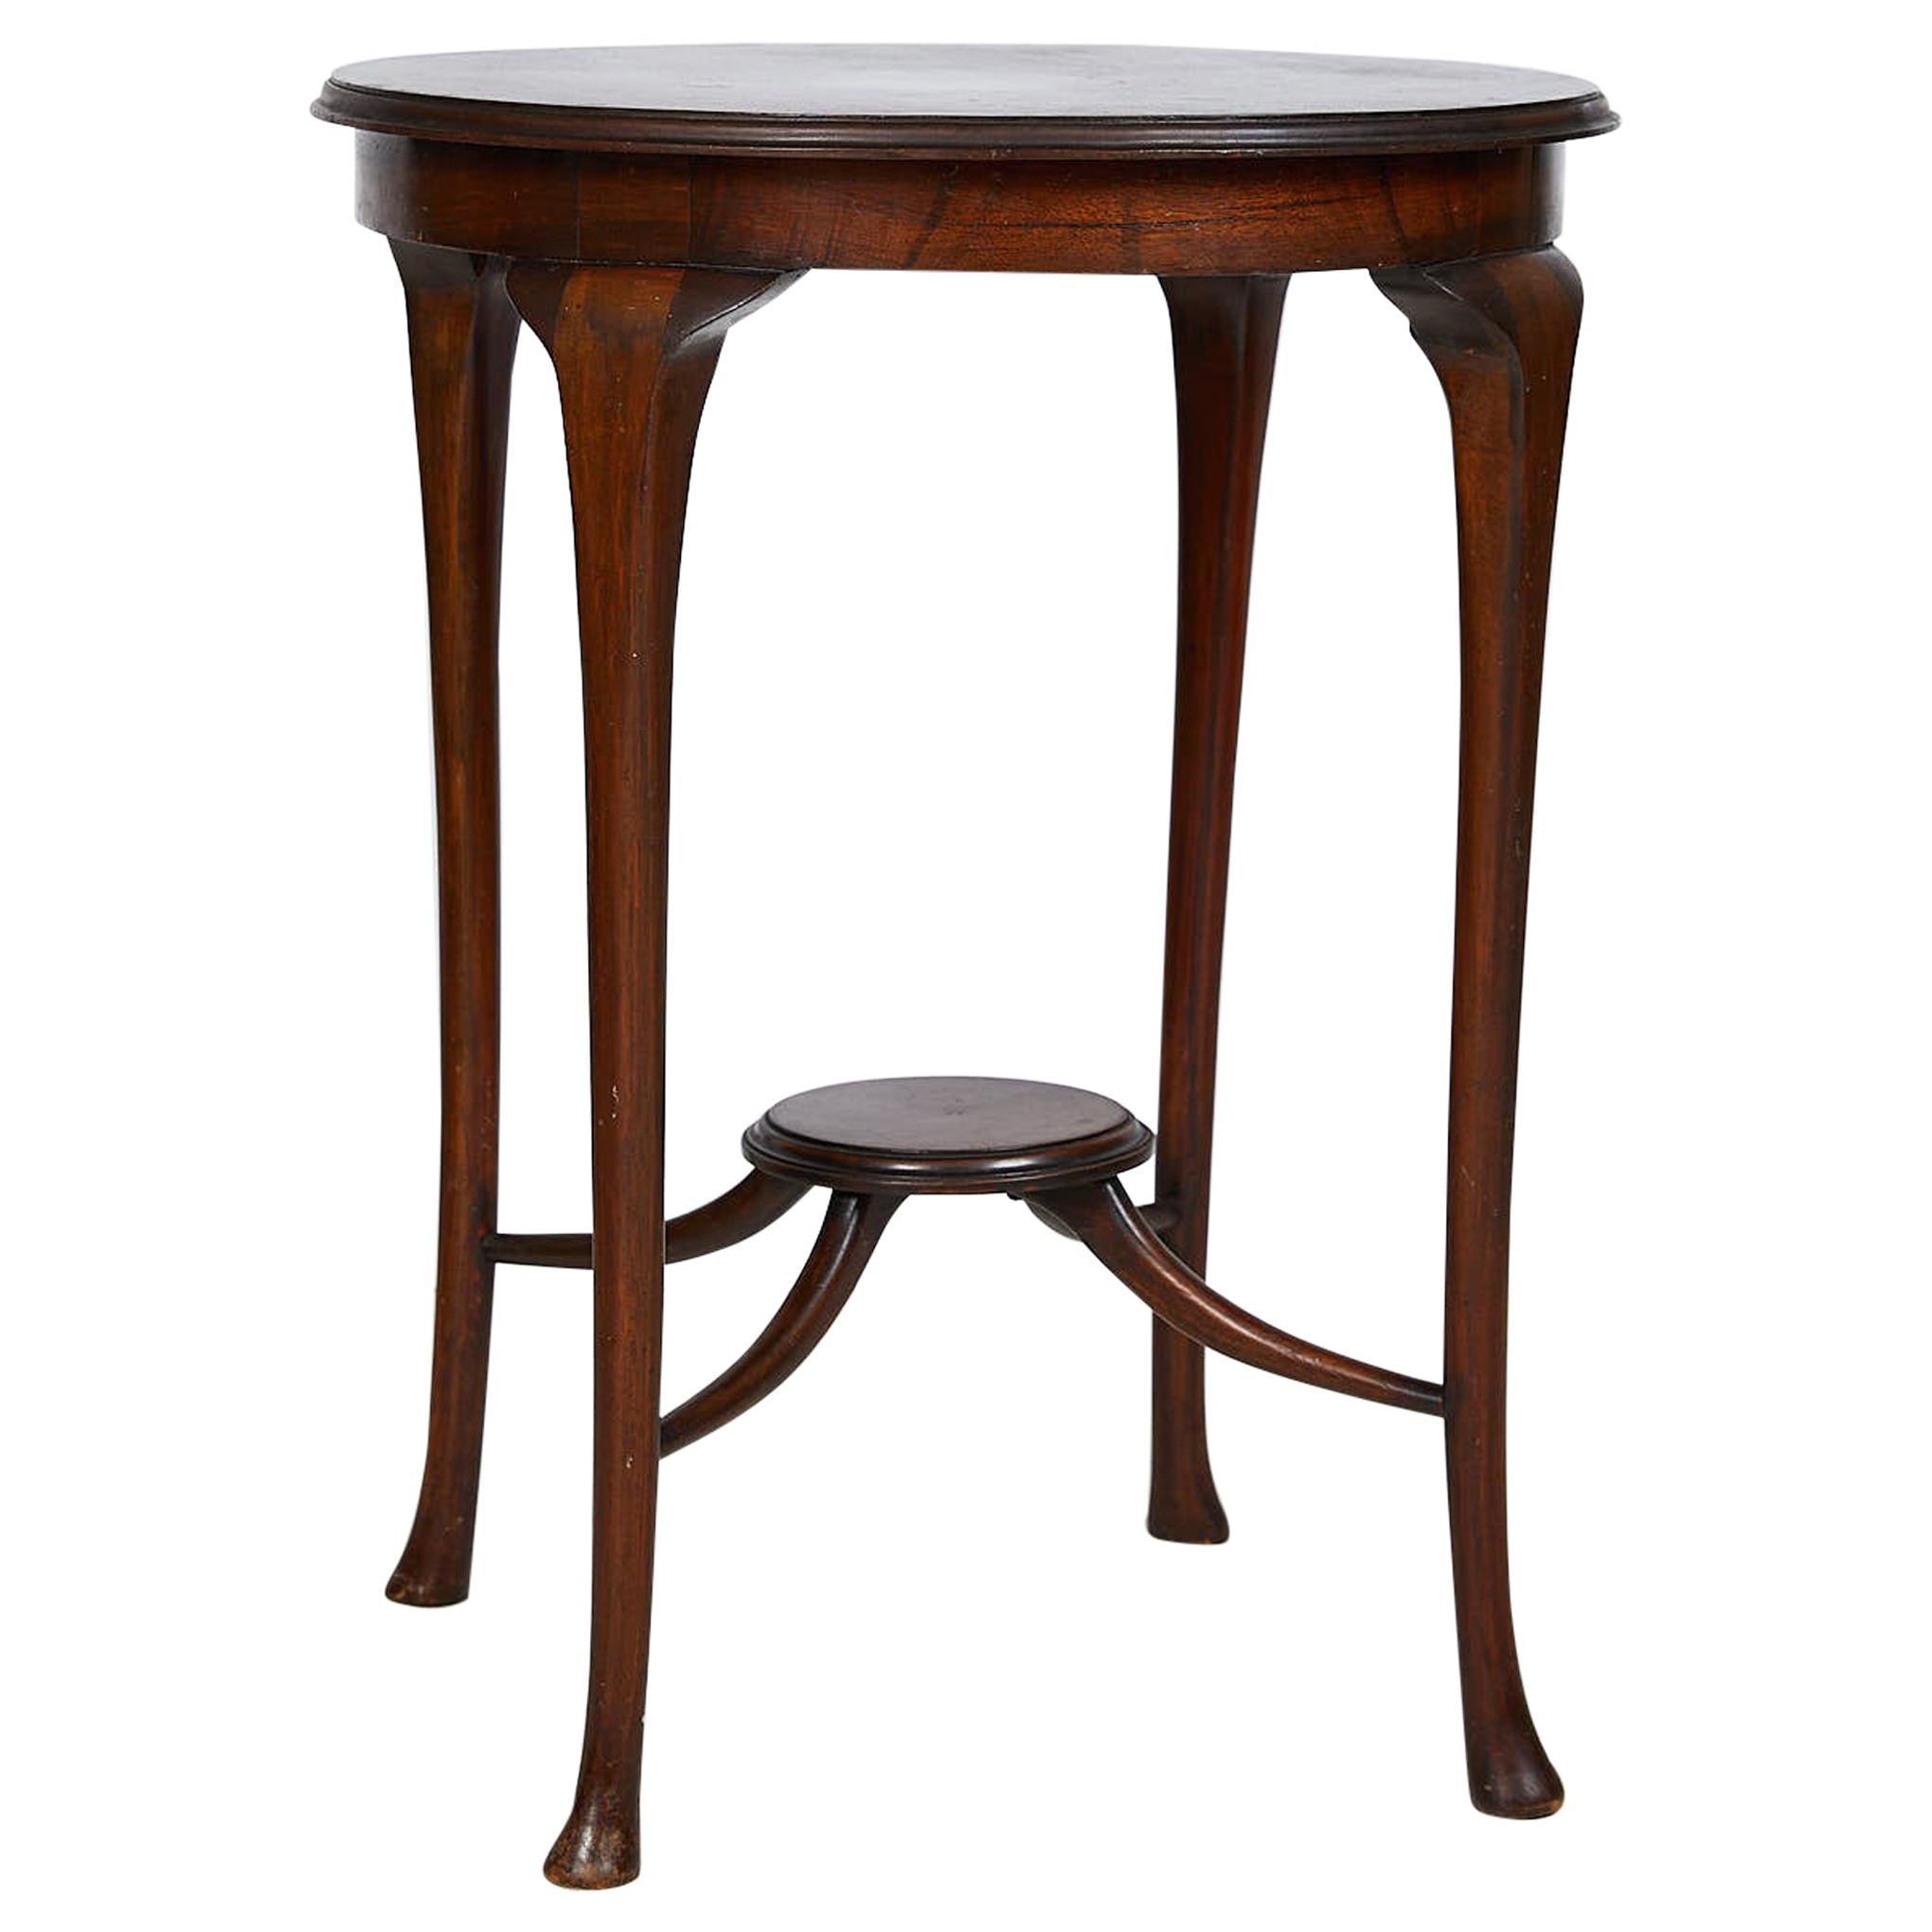 English Art Nouveau Round Tea Table of Mahogany